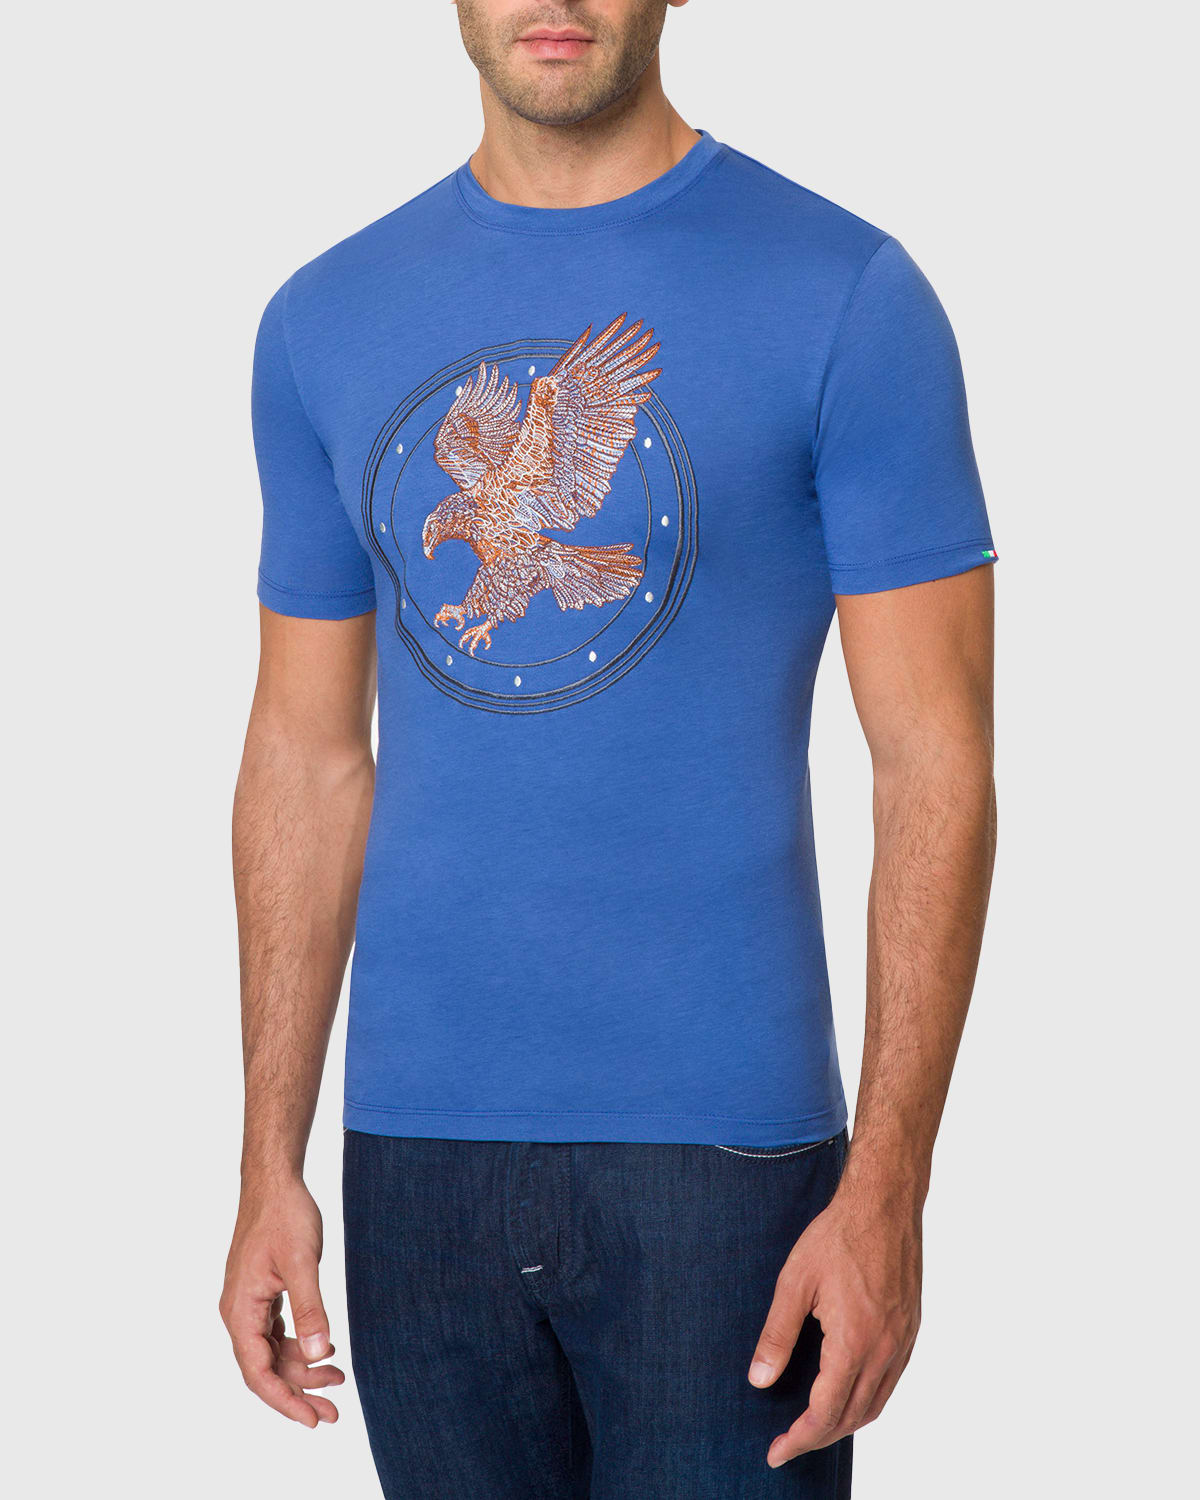 Men's Signature Eagle Graphic T-Shirt